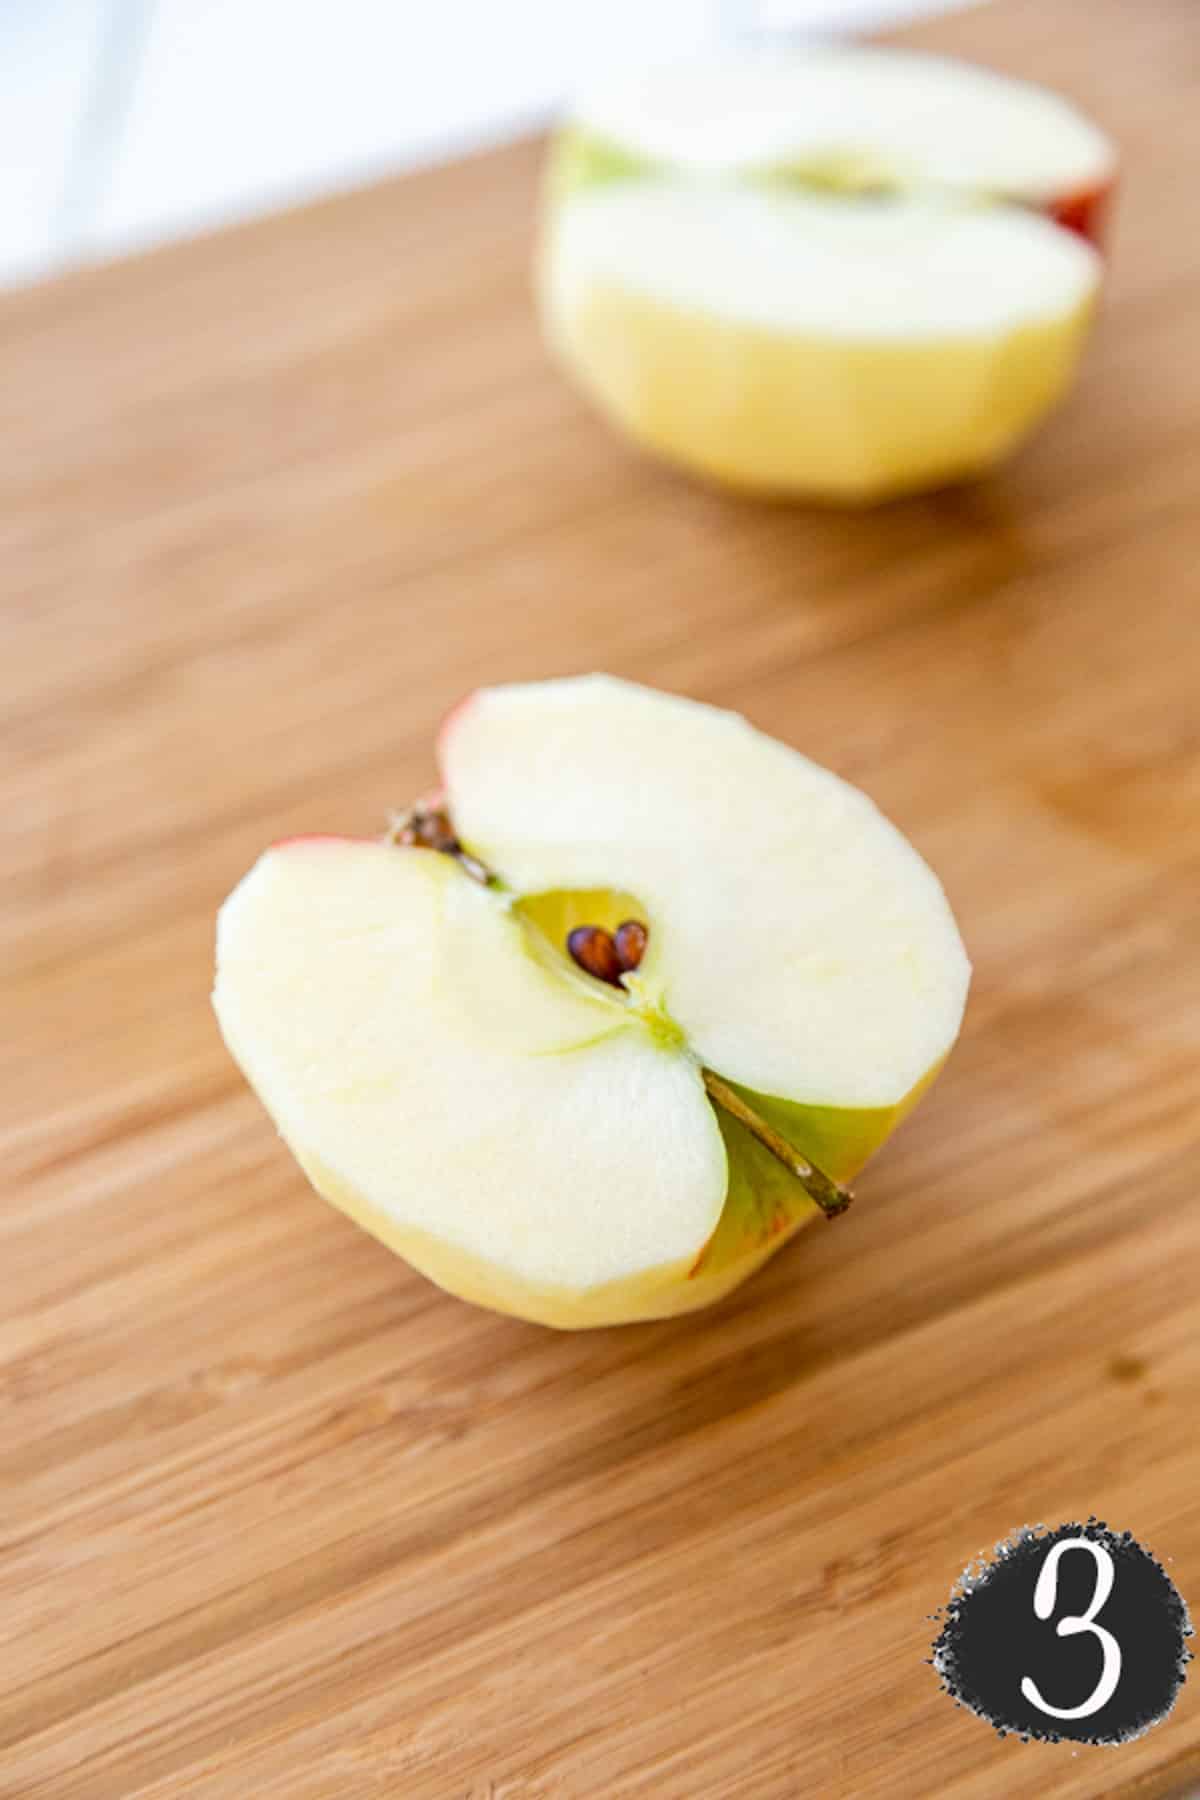 A peeled apple cut in half on a wooden board.